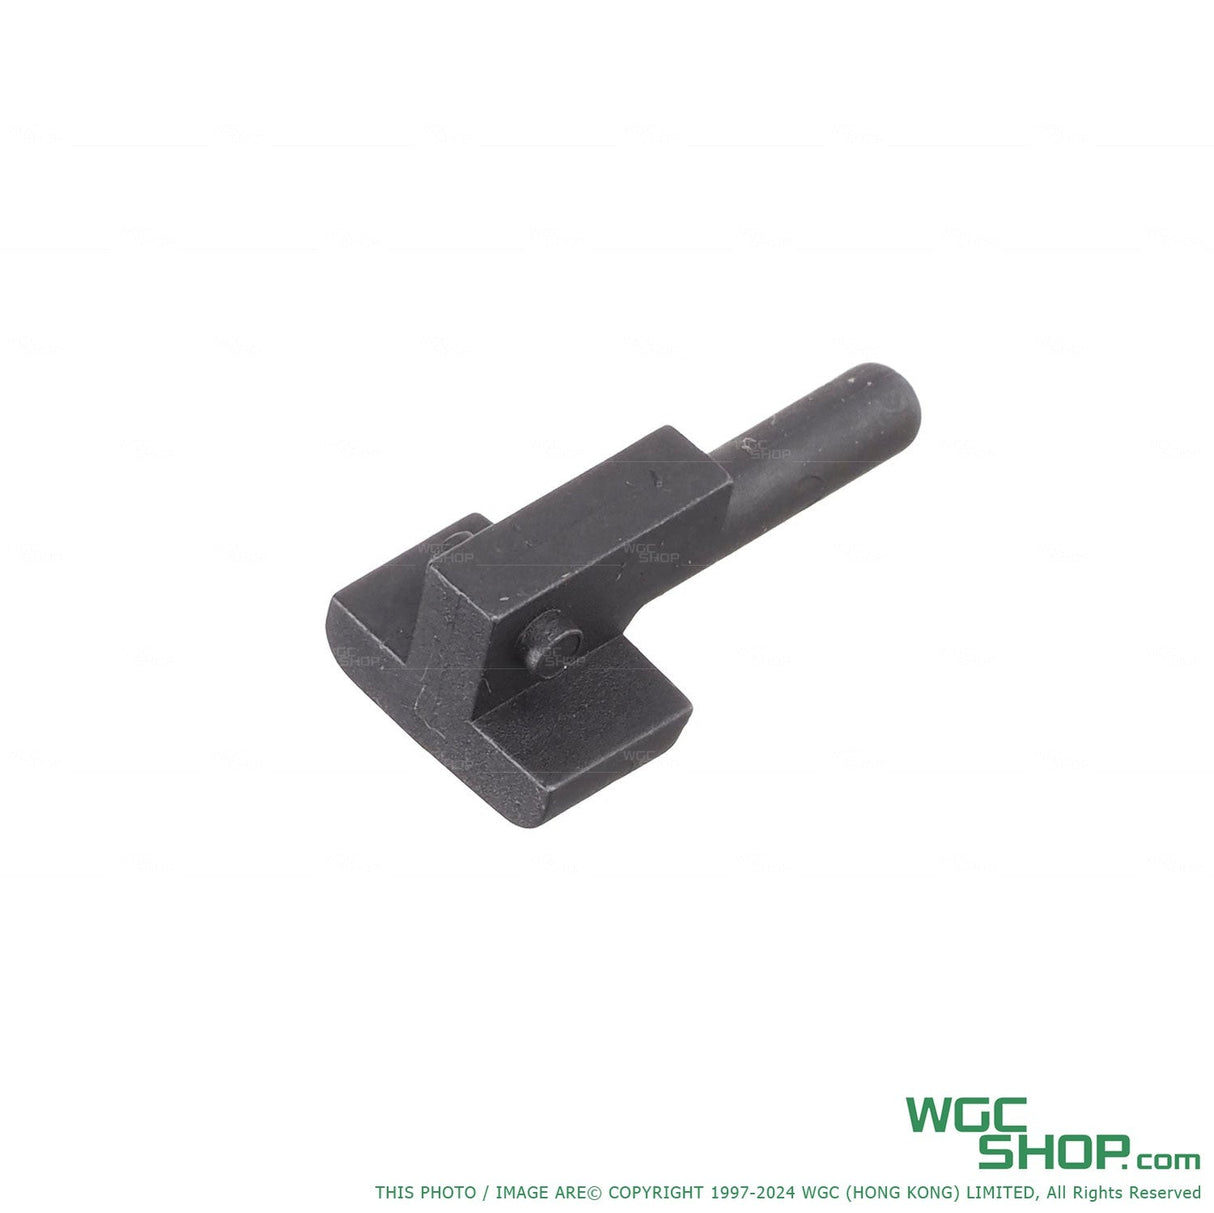 VFC Original Parts - MK25 GBB Recoil Spring Guide Rod Base ( VGCJHOP030 / 02-09 )